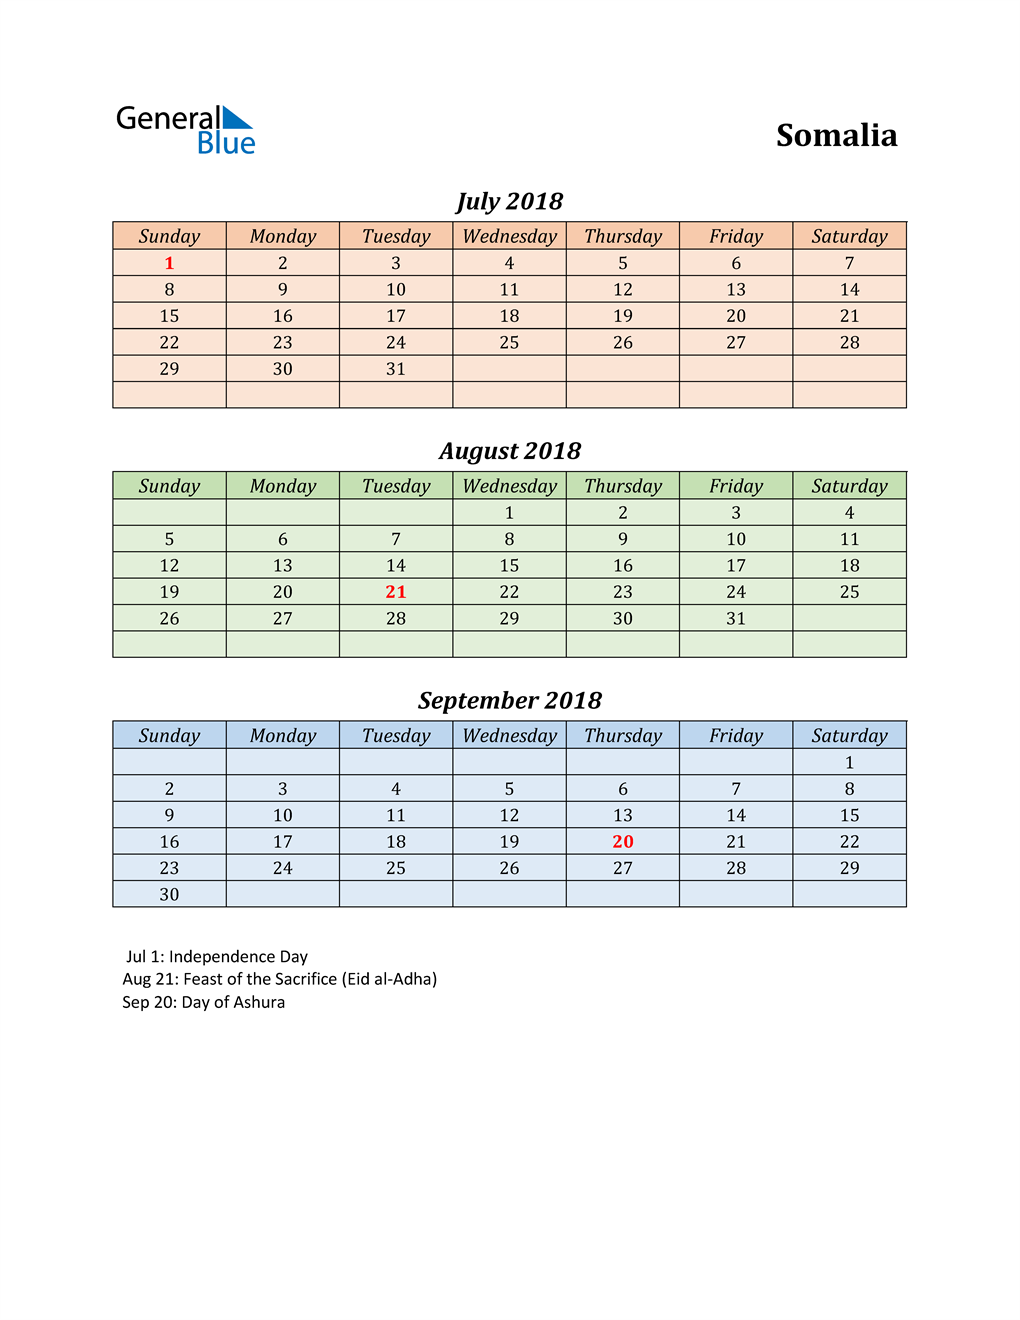  Q3 2018 Holiday Calendar - Somalia